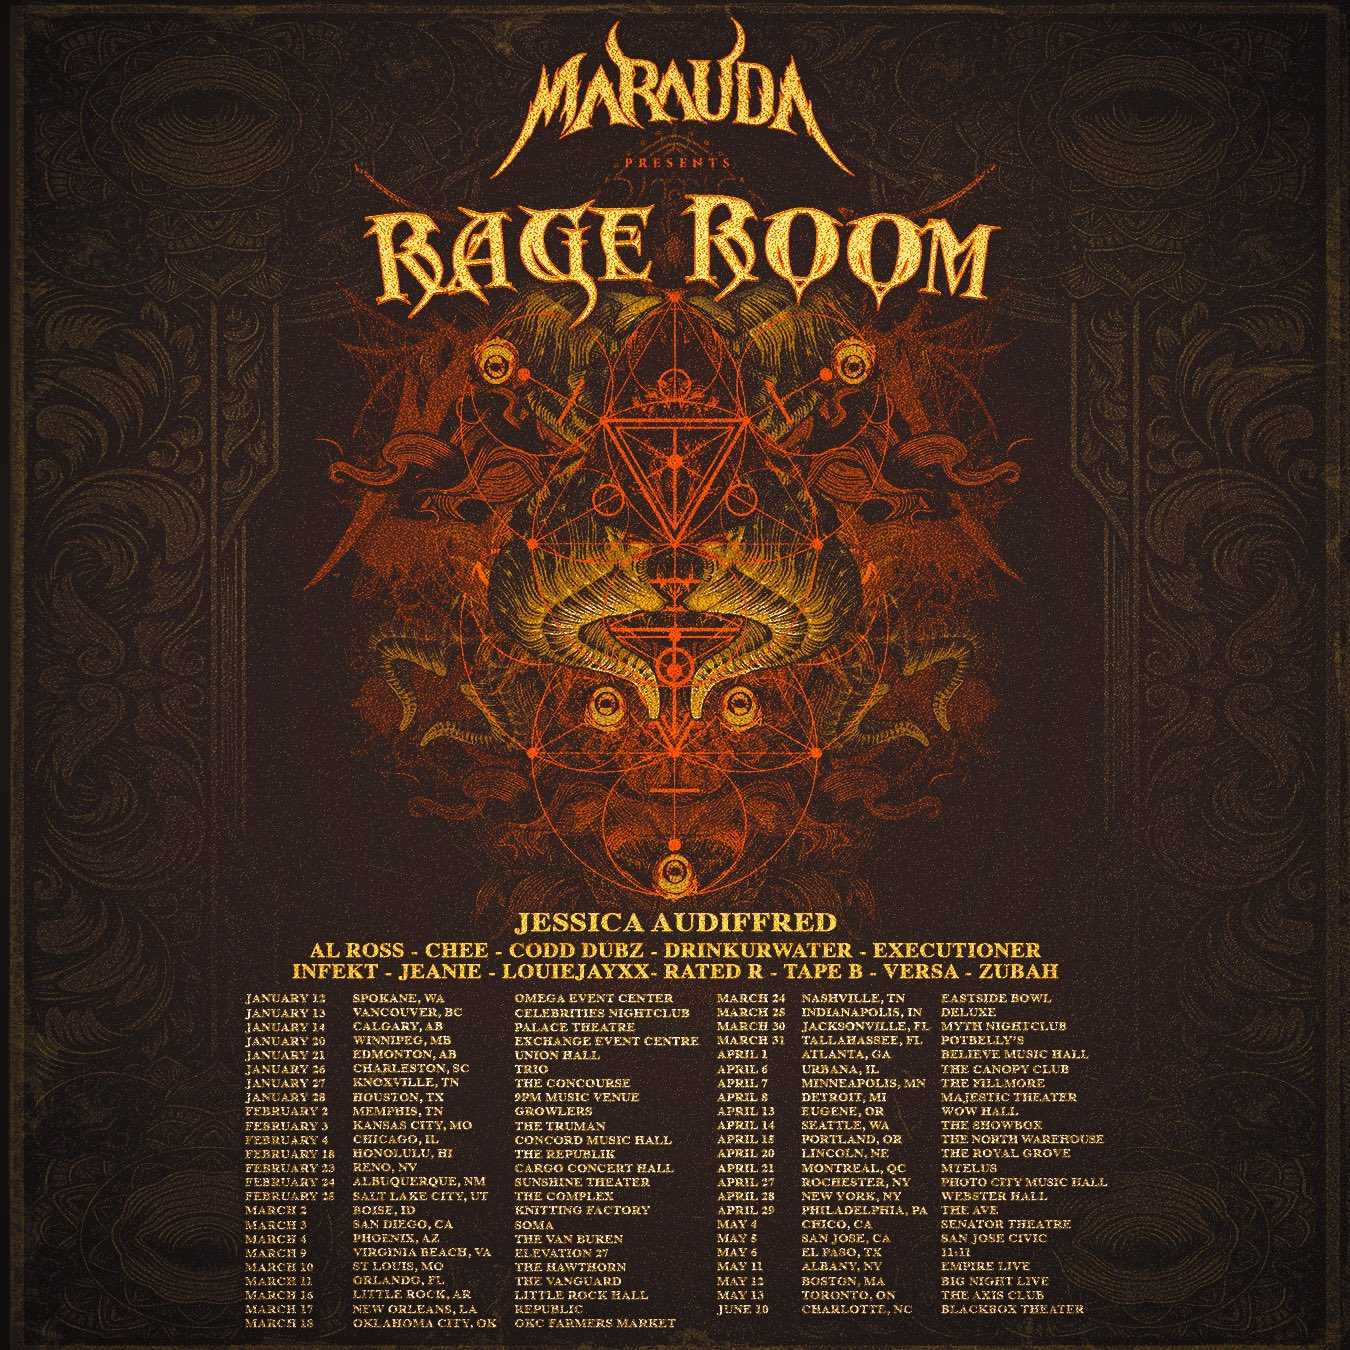 marauda-rage-room-tour-little-rock